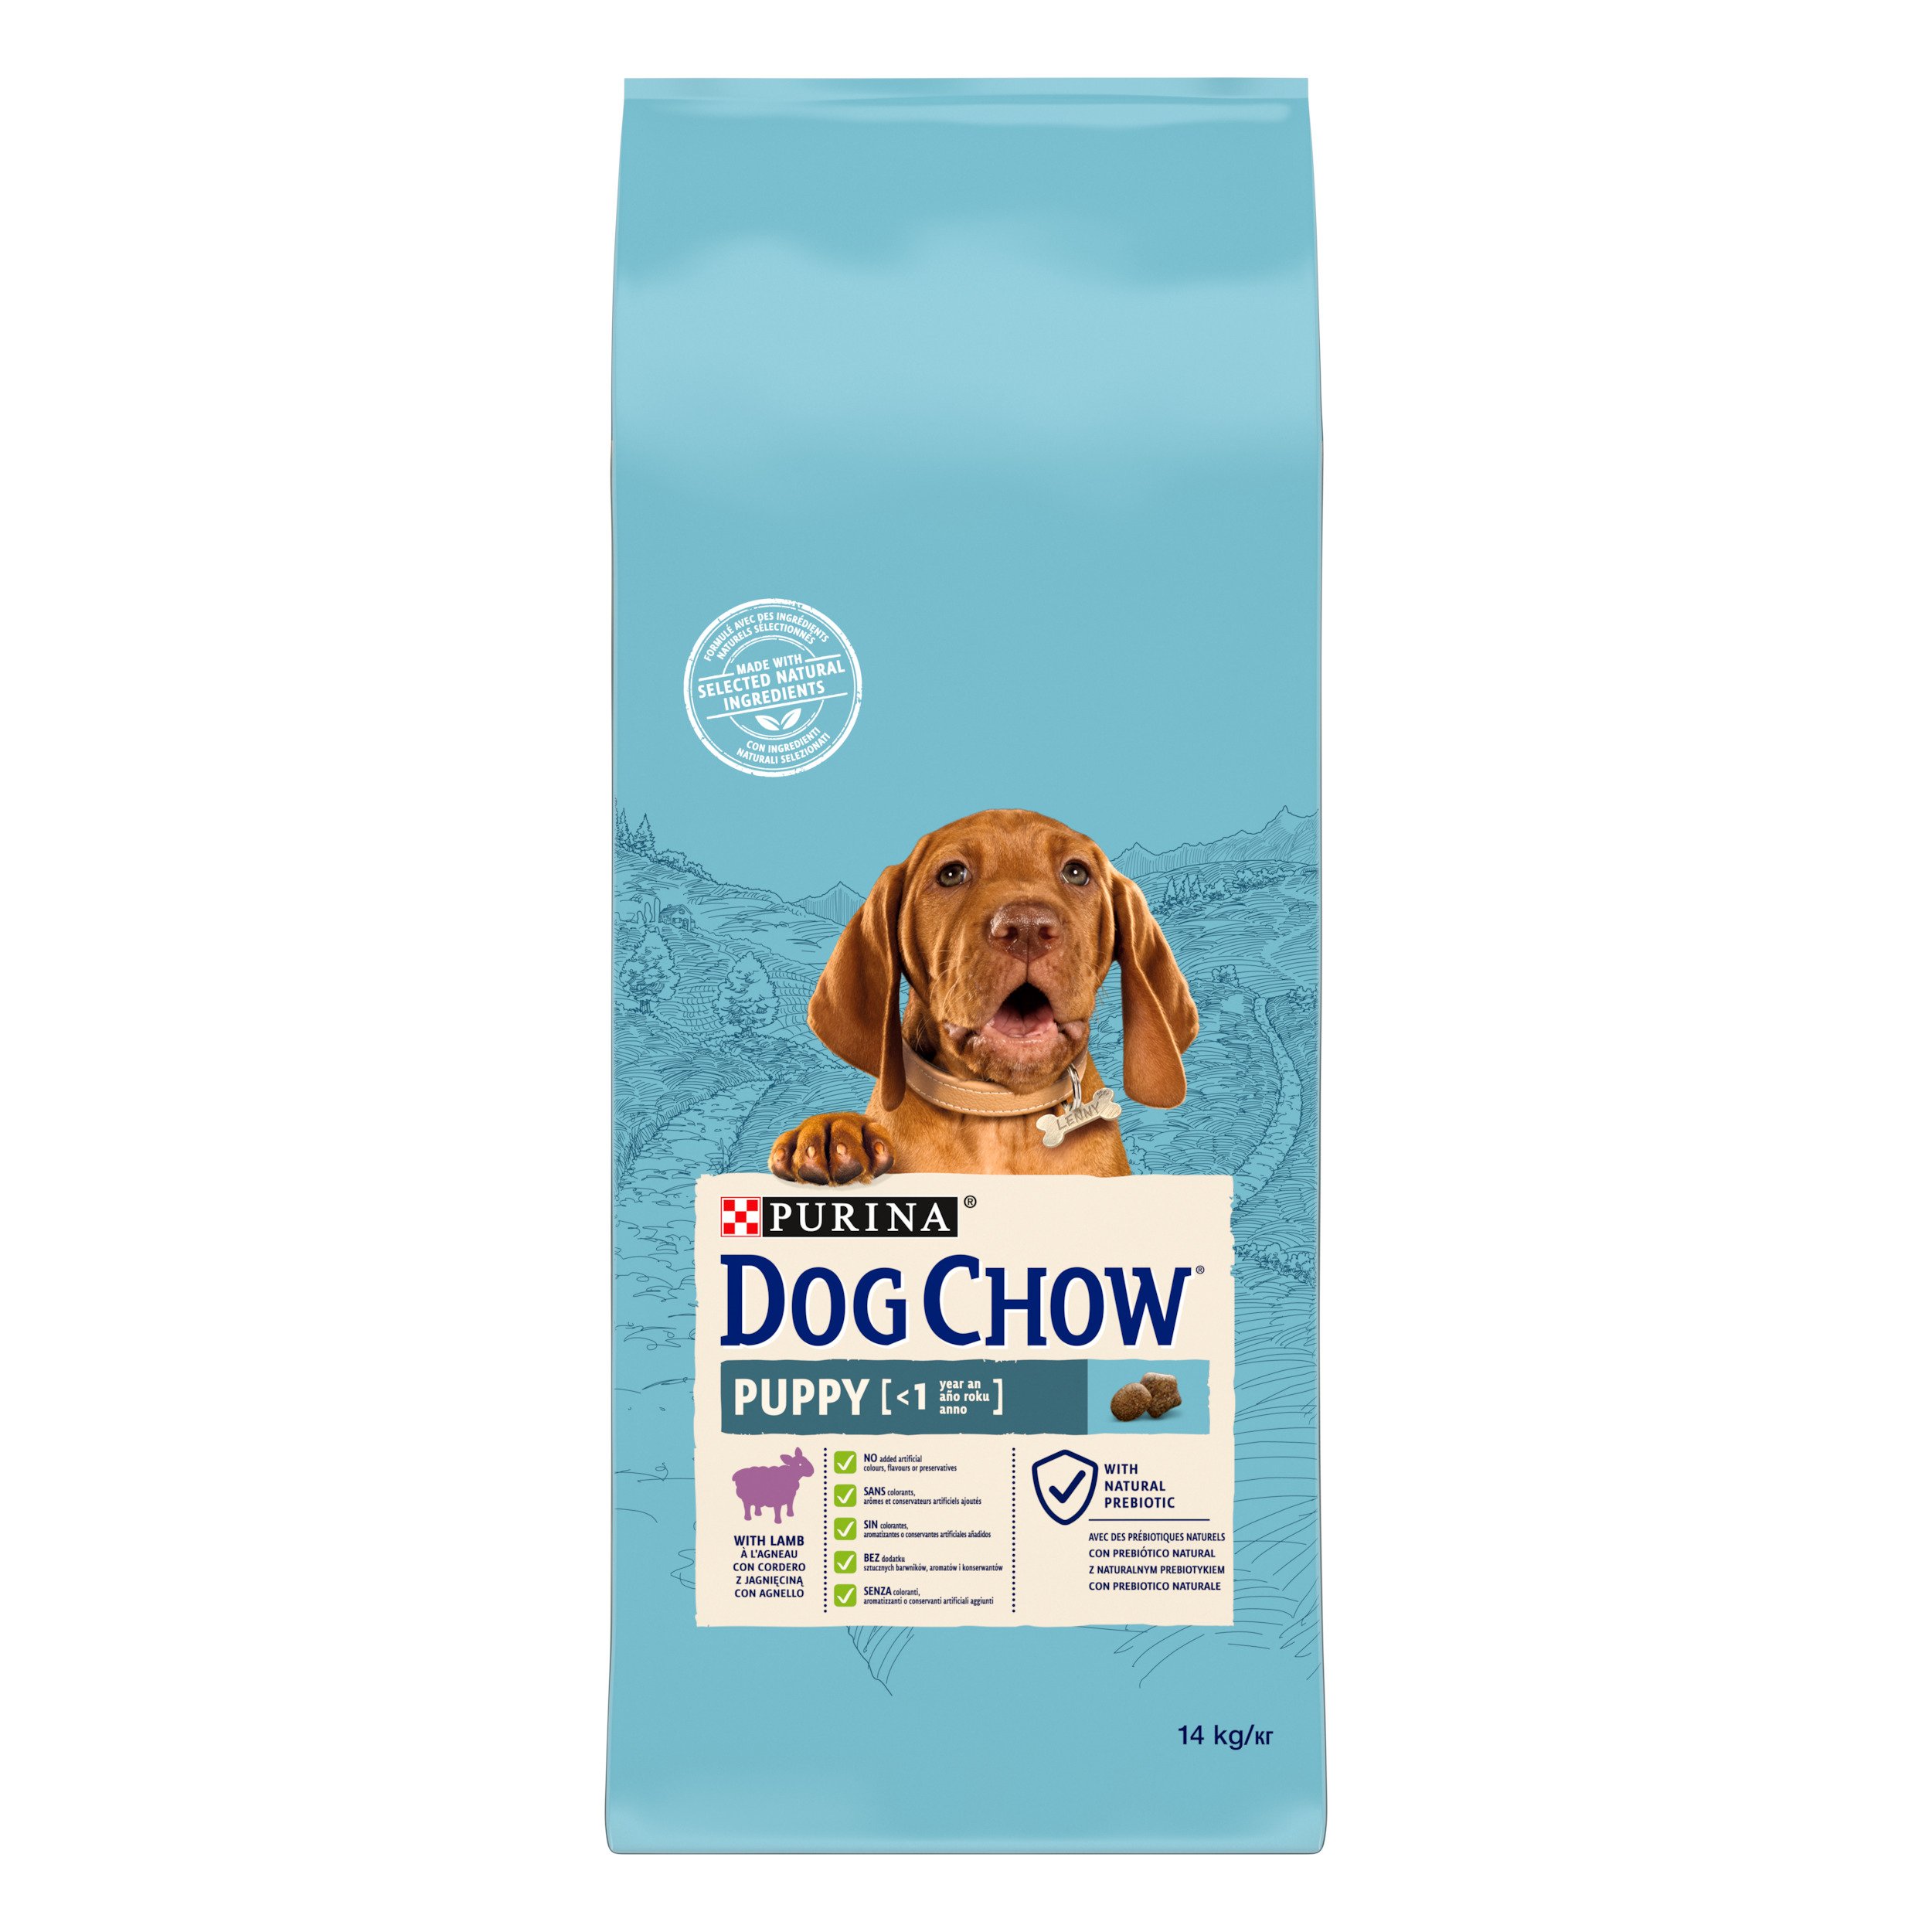 Сухой корм для щенков Dog Chow Puppy <1, с ягненком, 14 кг - фото 1